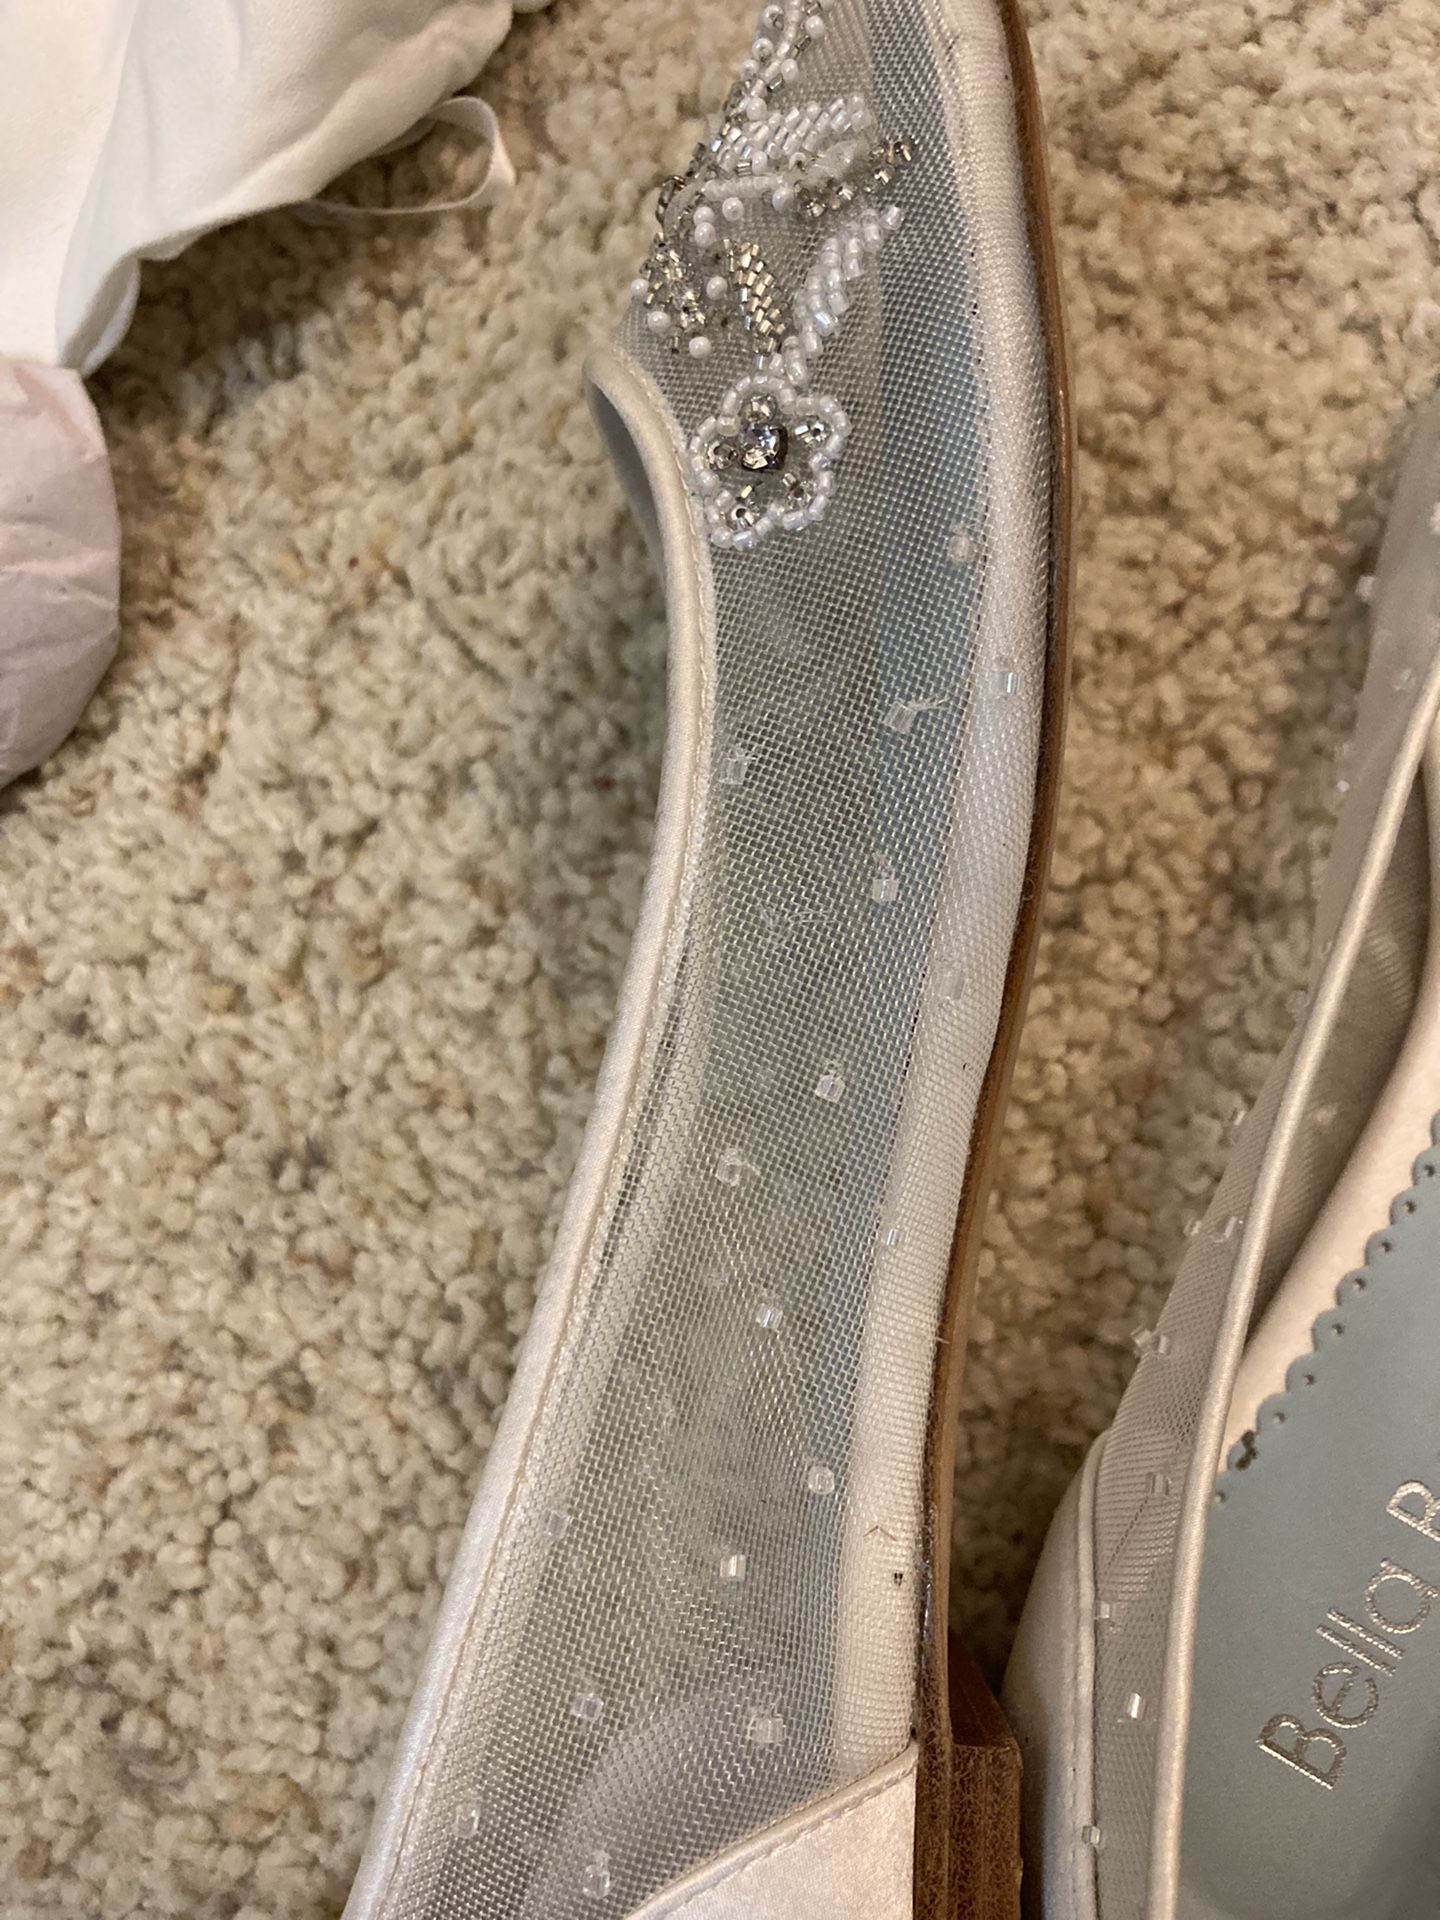 Bella Belle Adora Wedding Shoes/ Flats 